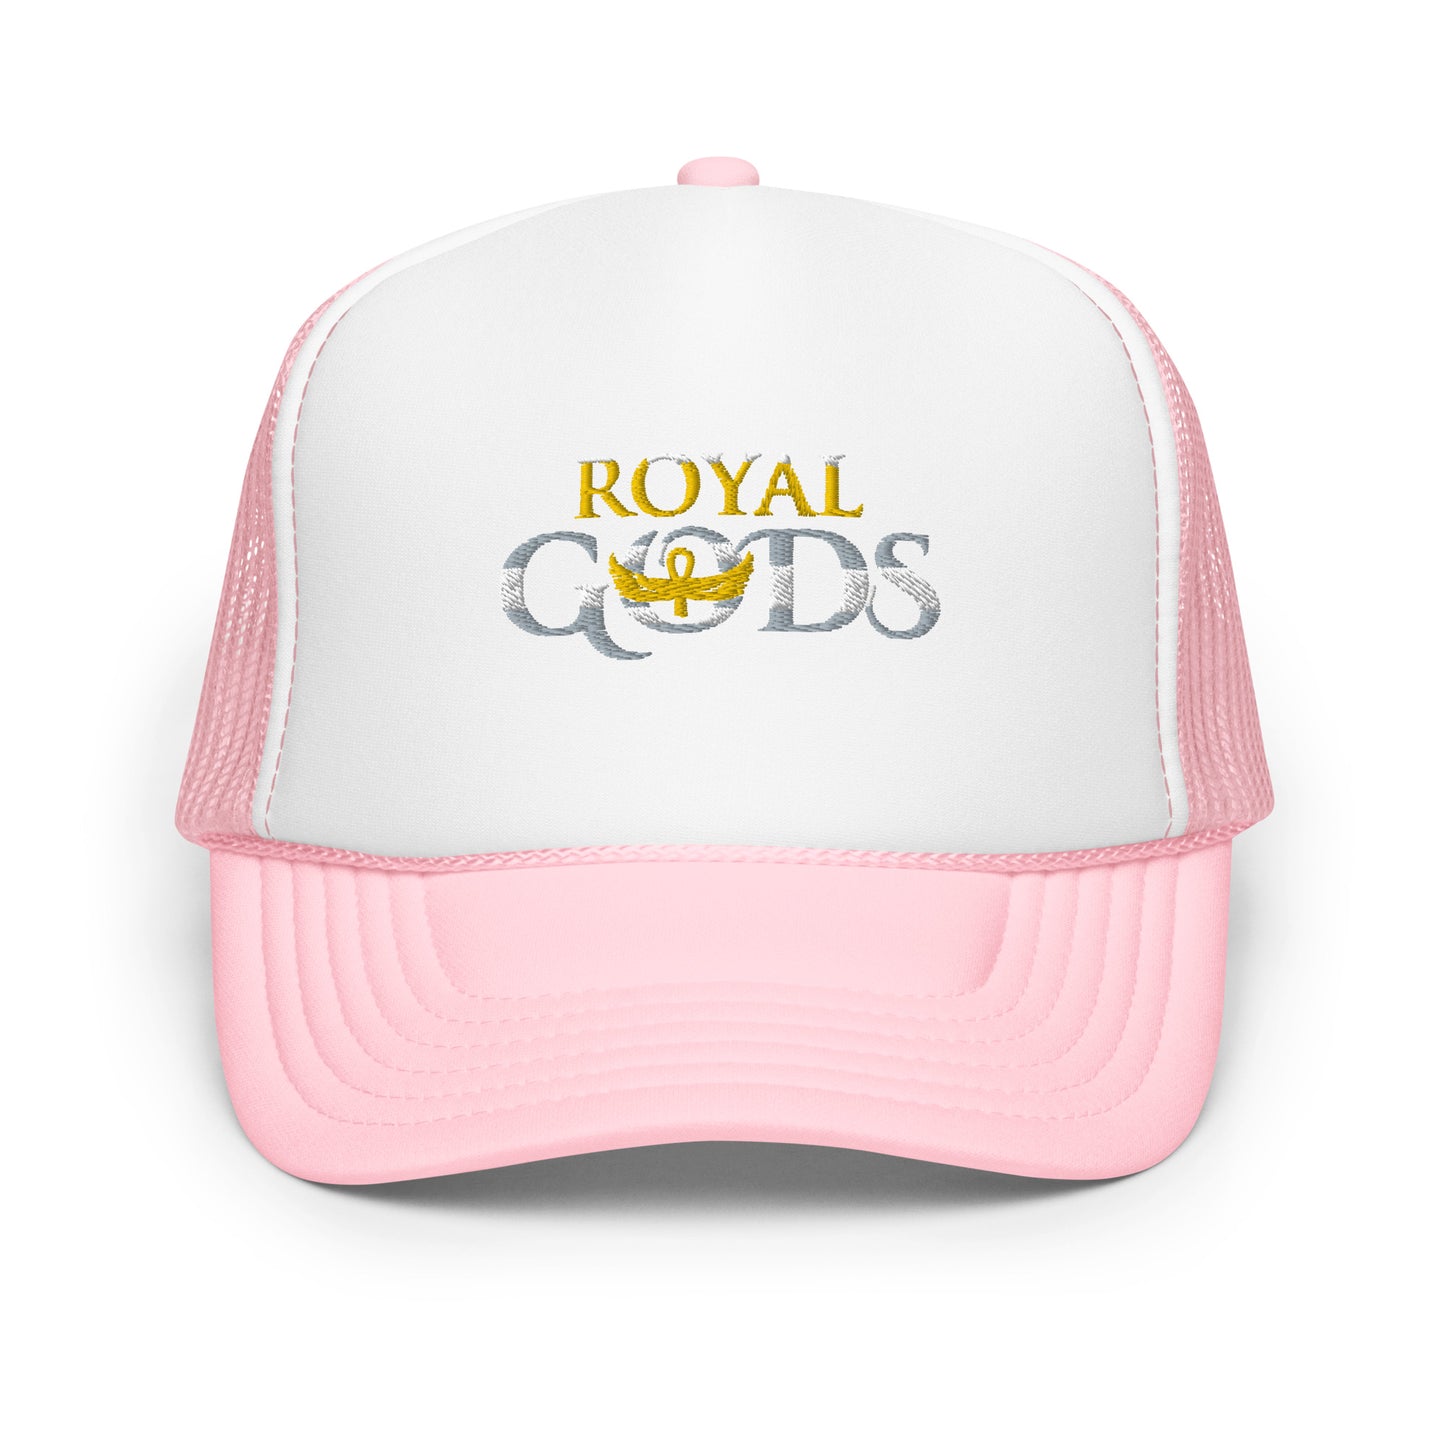 Royal Gods Trucker Hat